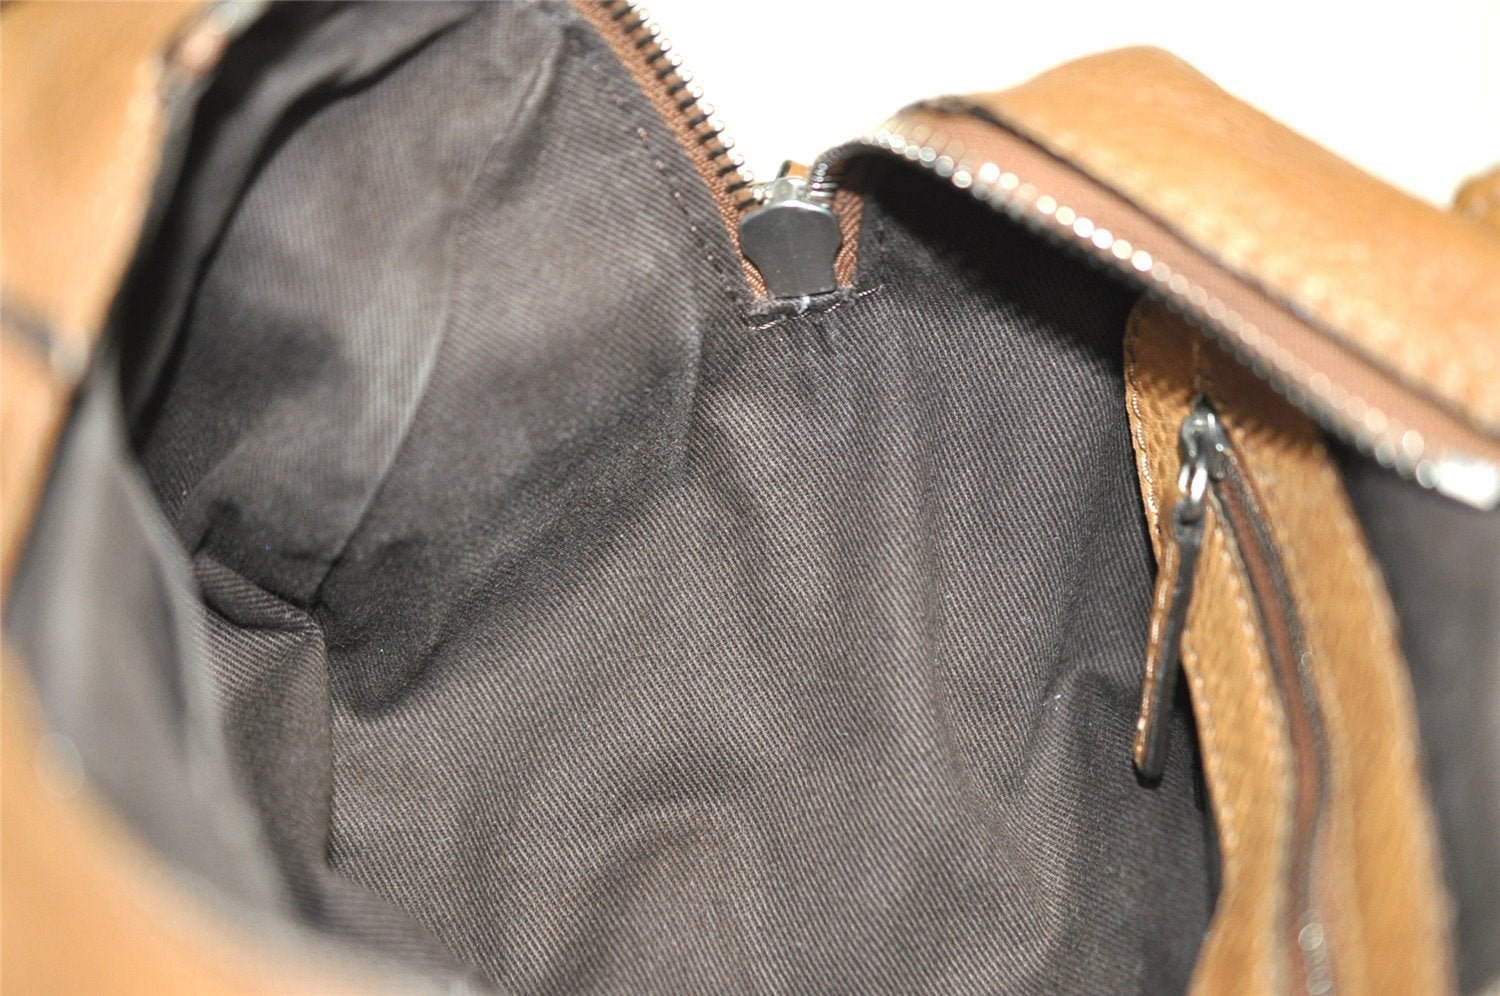 Authentic Chloe Paddington Leather 2Way Shoulder Hand Bag Purse Brown 3662I